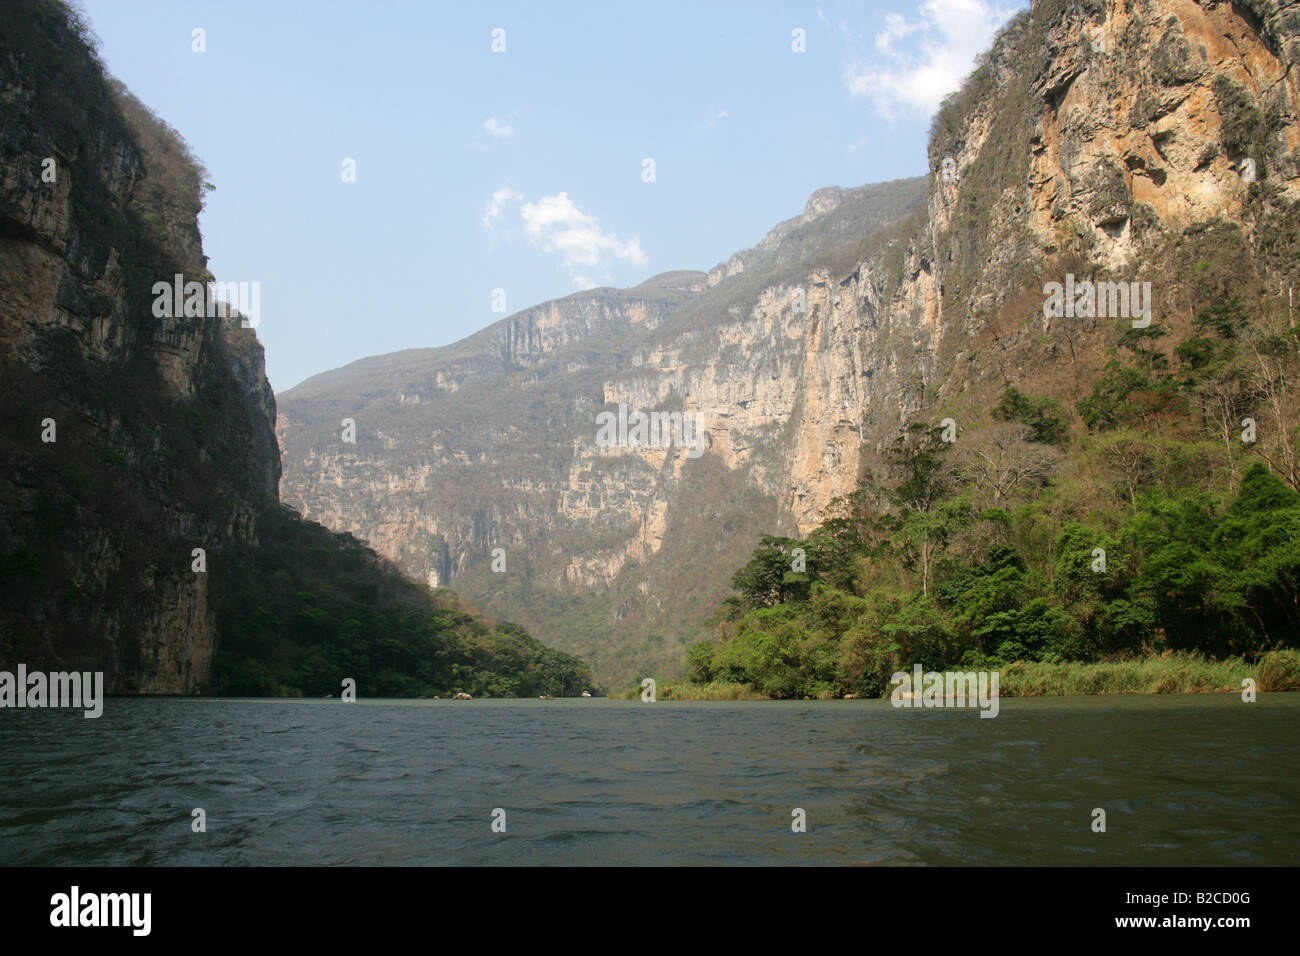 Sumidero Canyon and Grijalva River, Chiapas State, Mexico Stock Photo